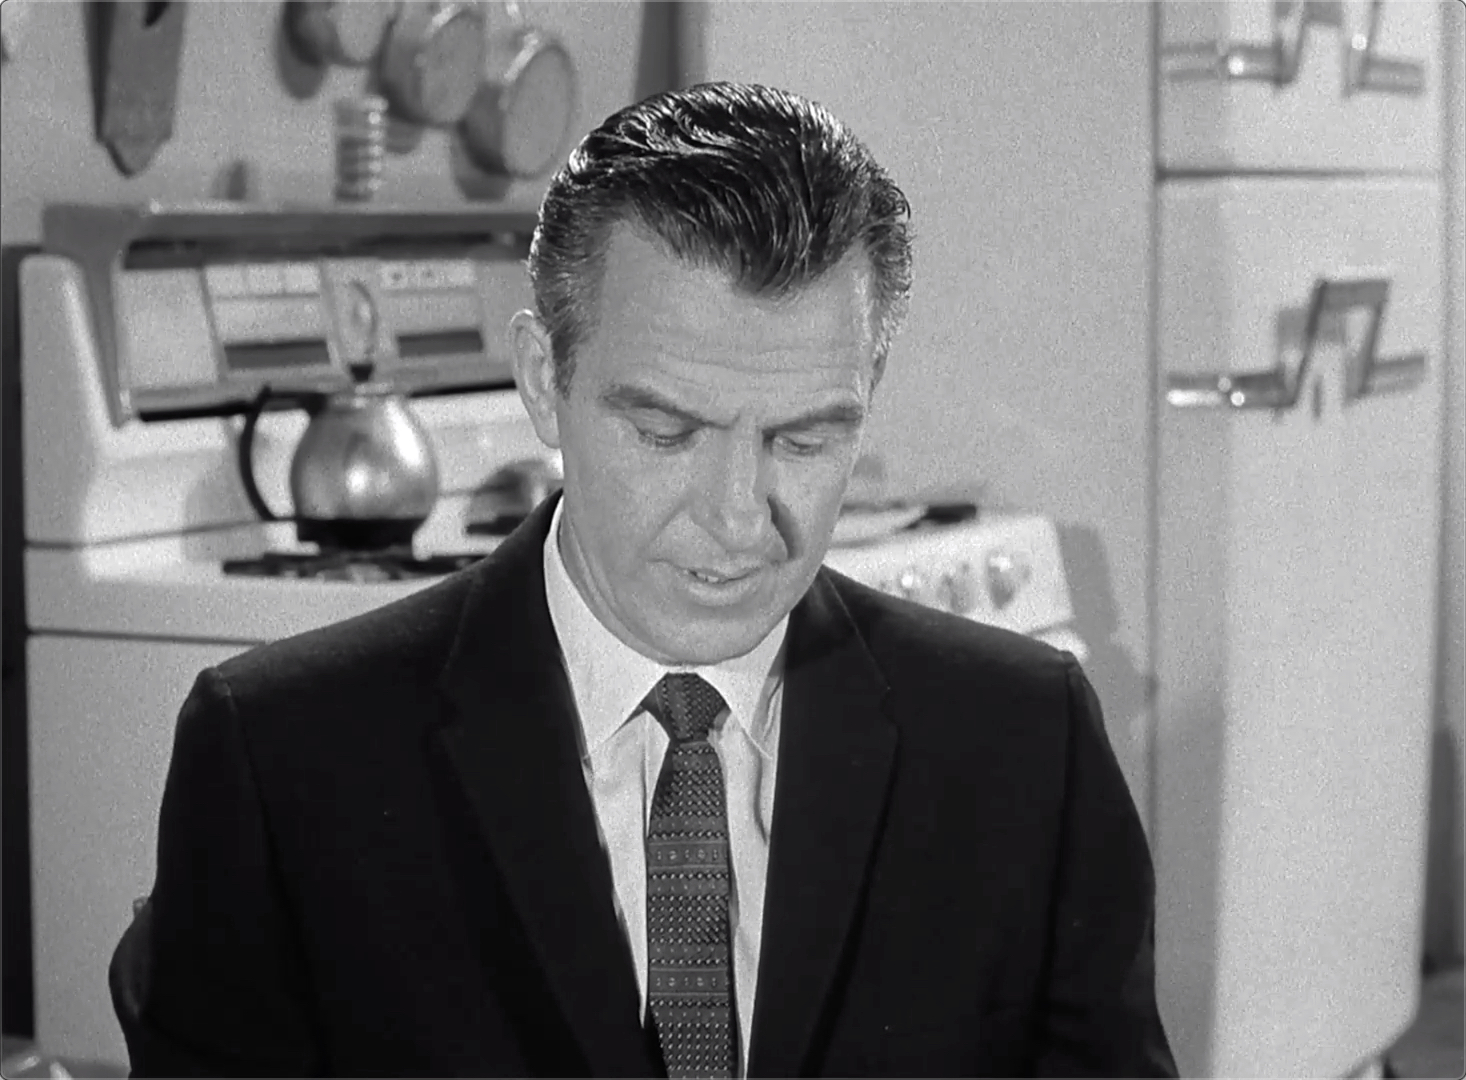 Leave it to Beaver S02E39 Most interesting Character (Jun.25.1959)-92.jpg